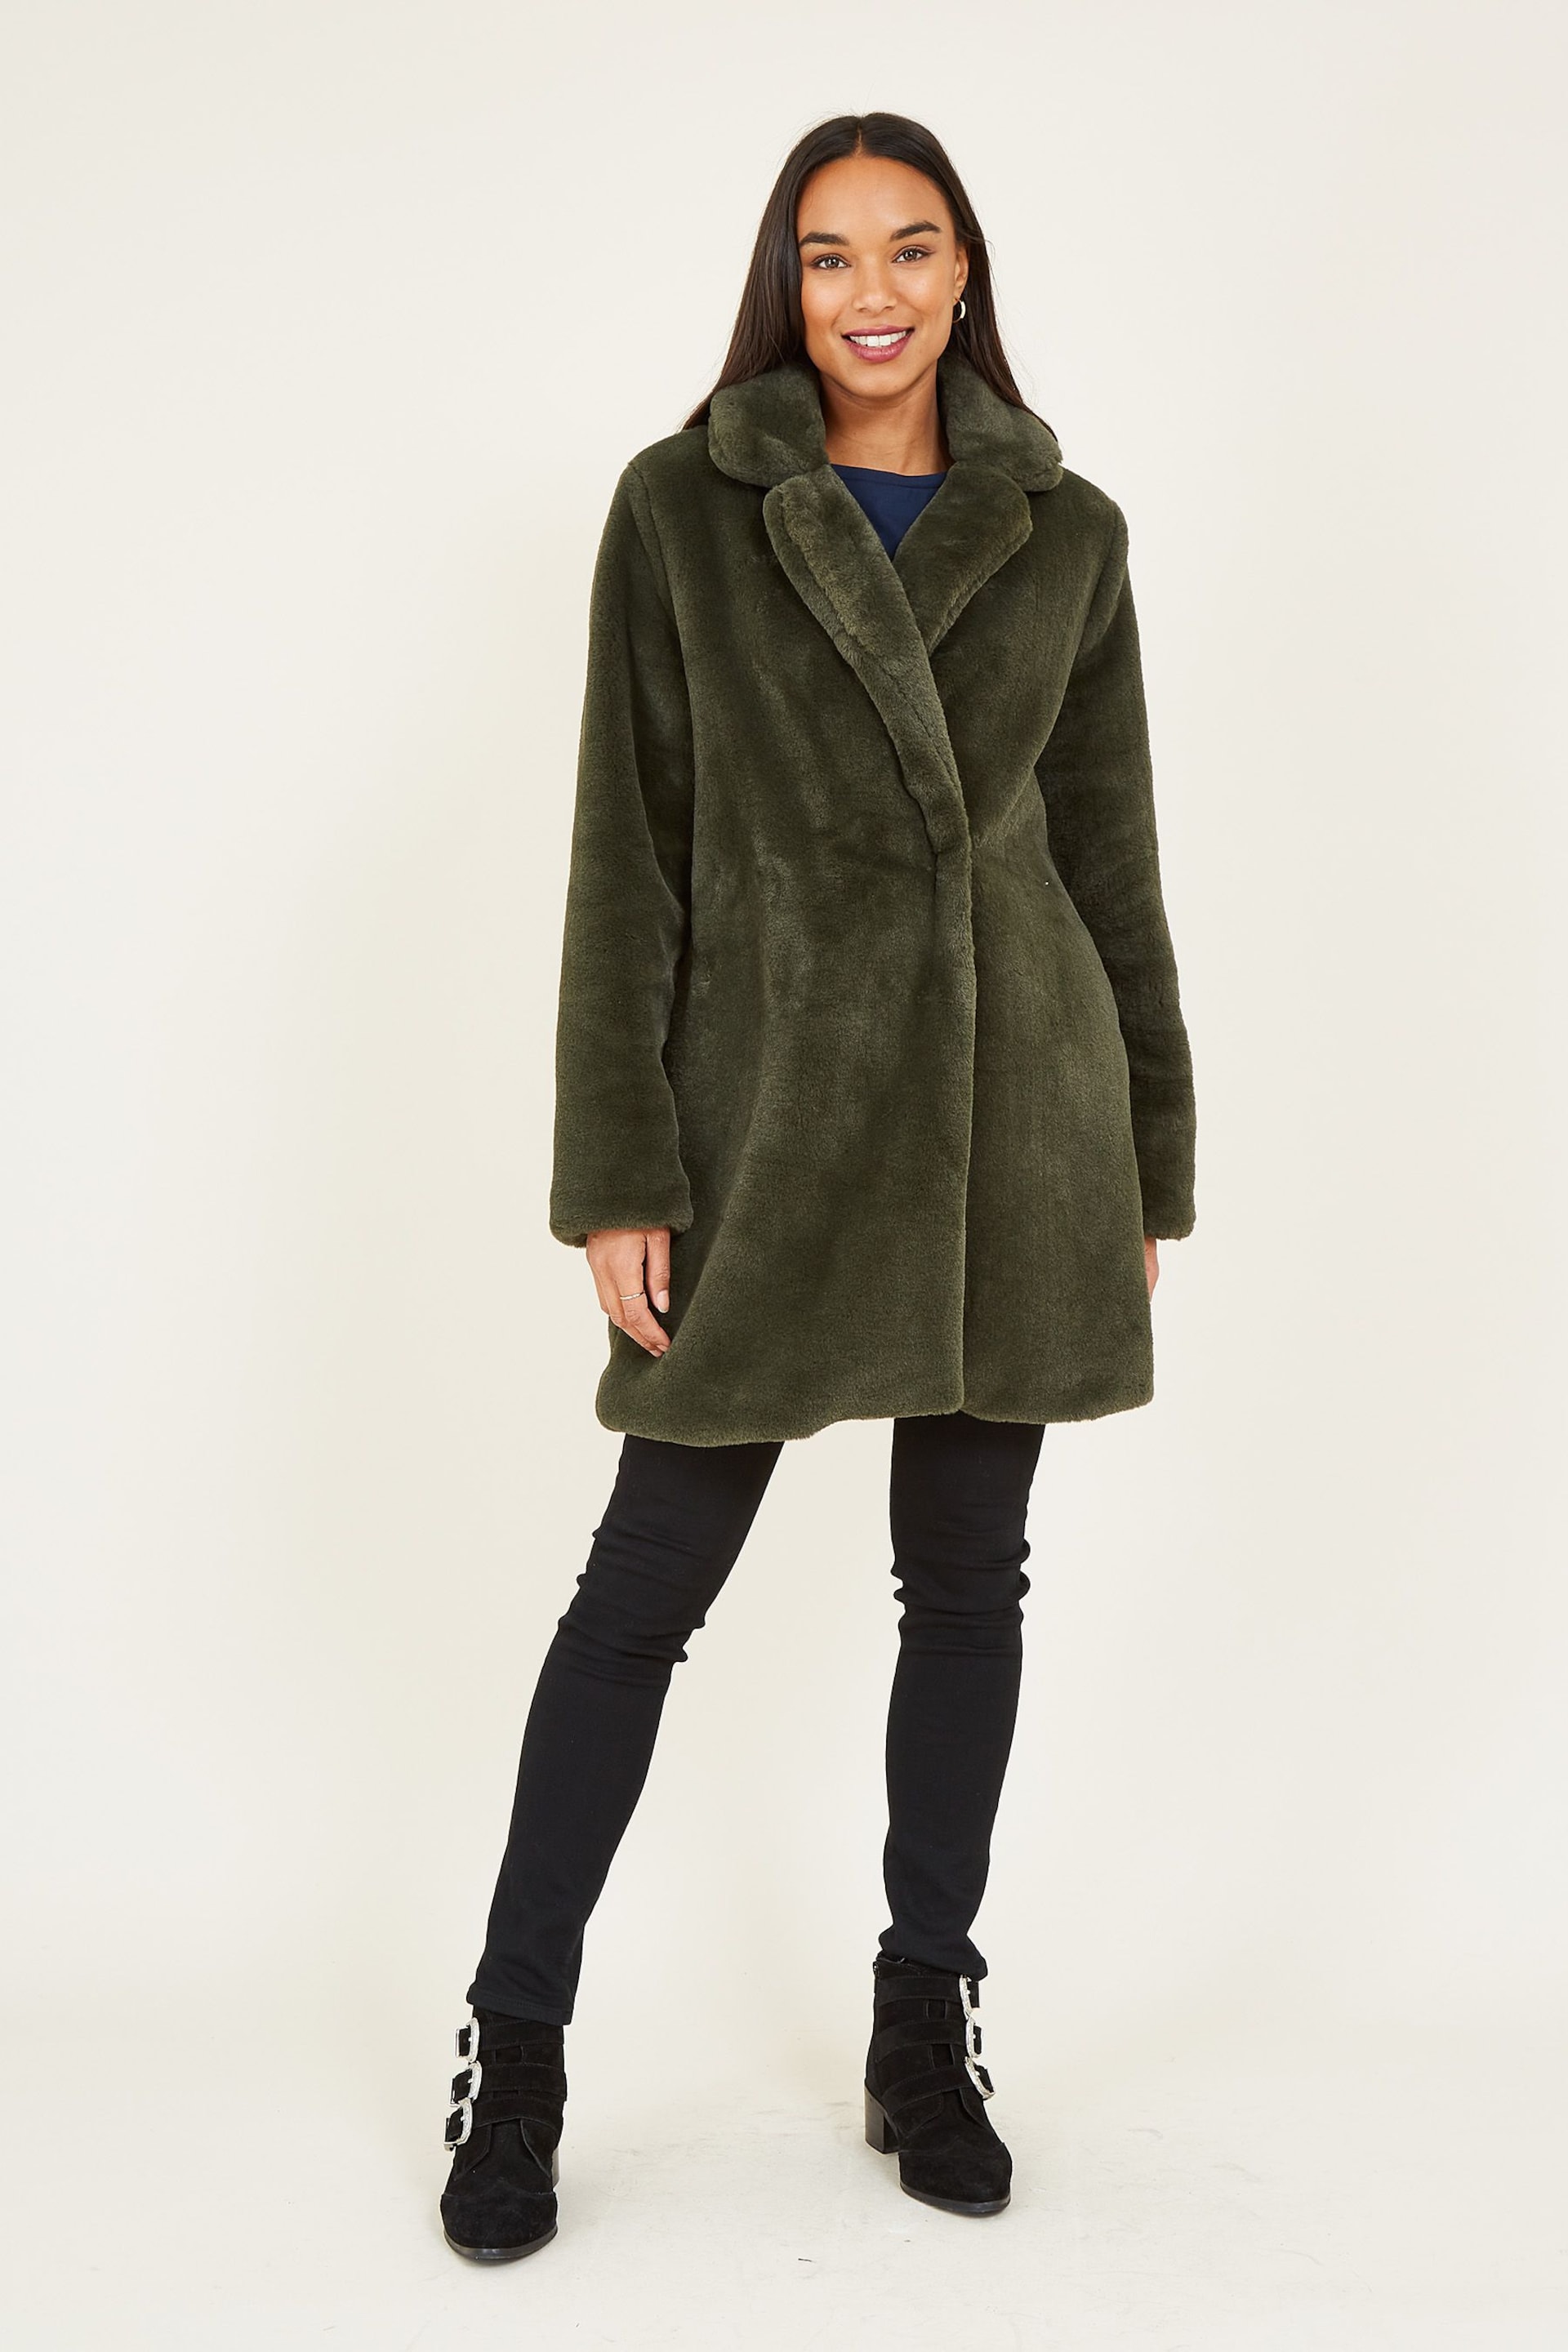 Yumi Green Faux Fur Coat - Image 3 of 5